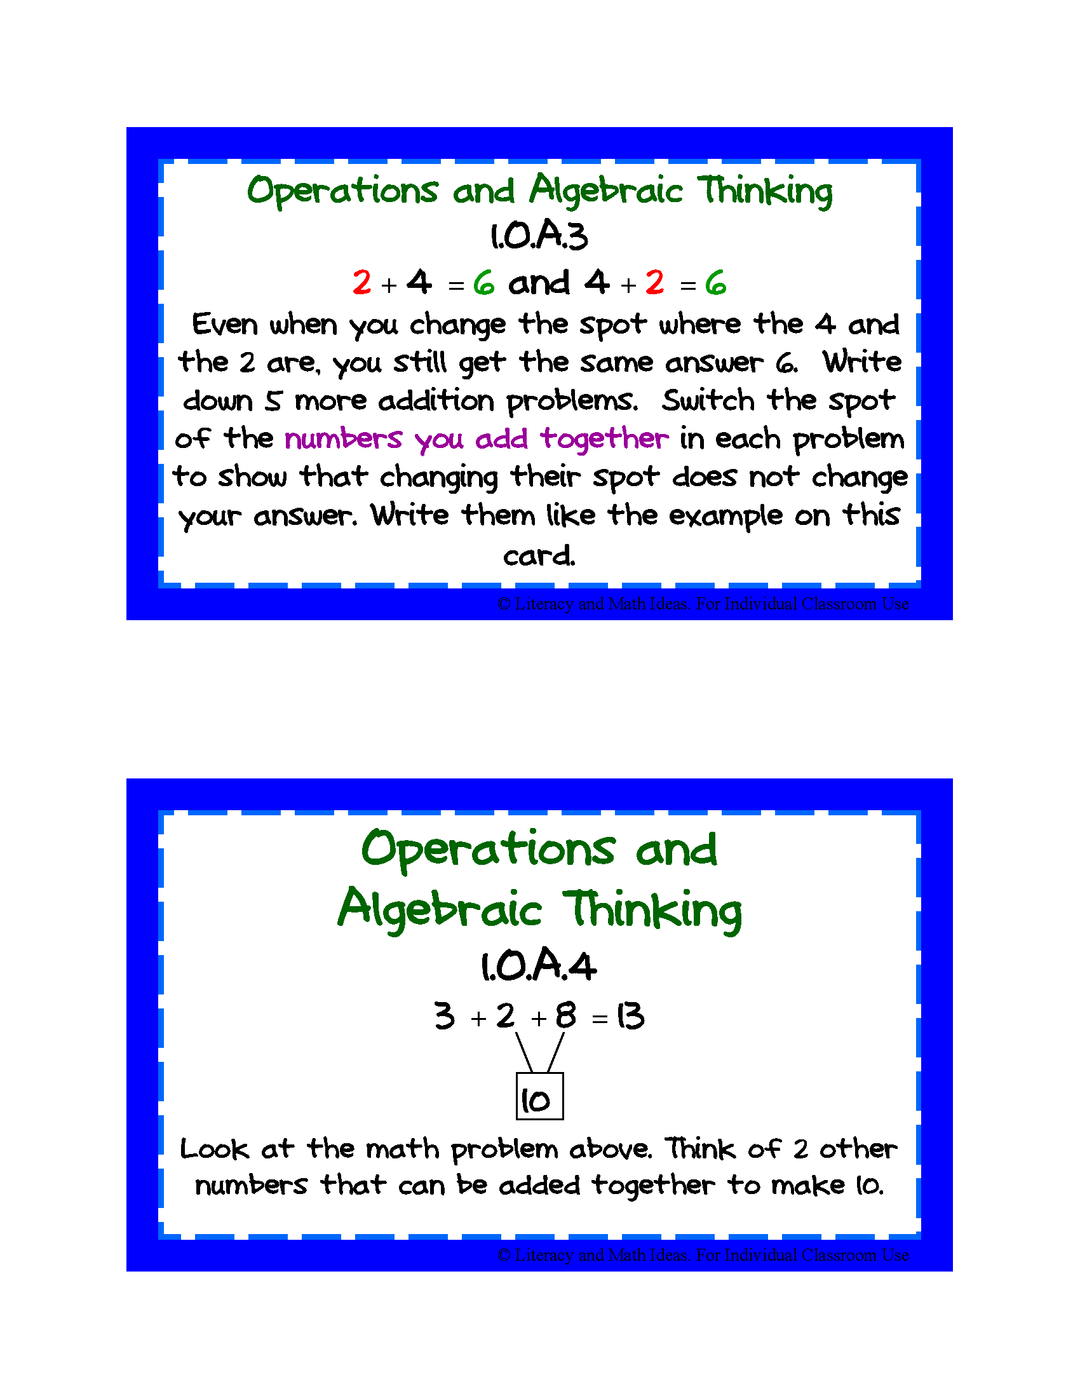 Common Core Standards Math Task Cards: Grade 1